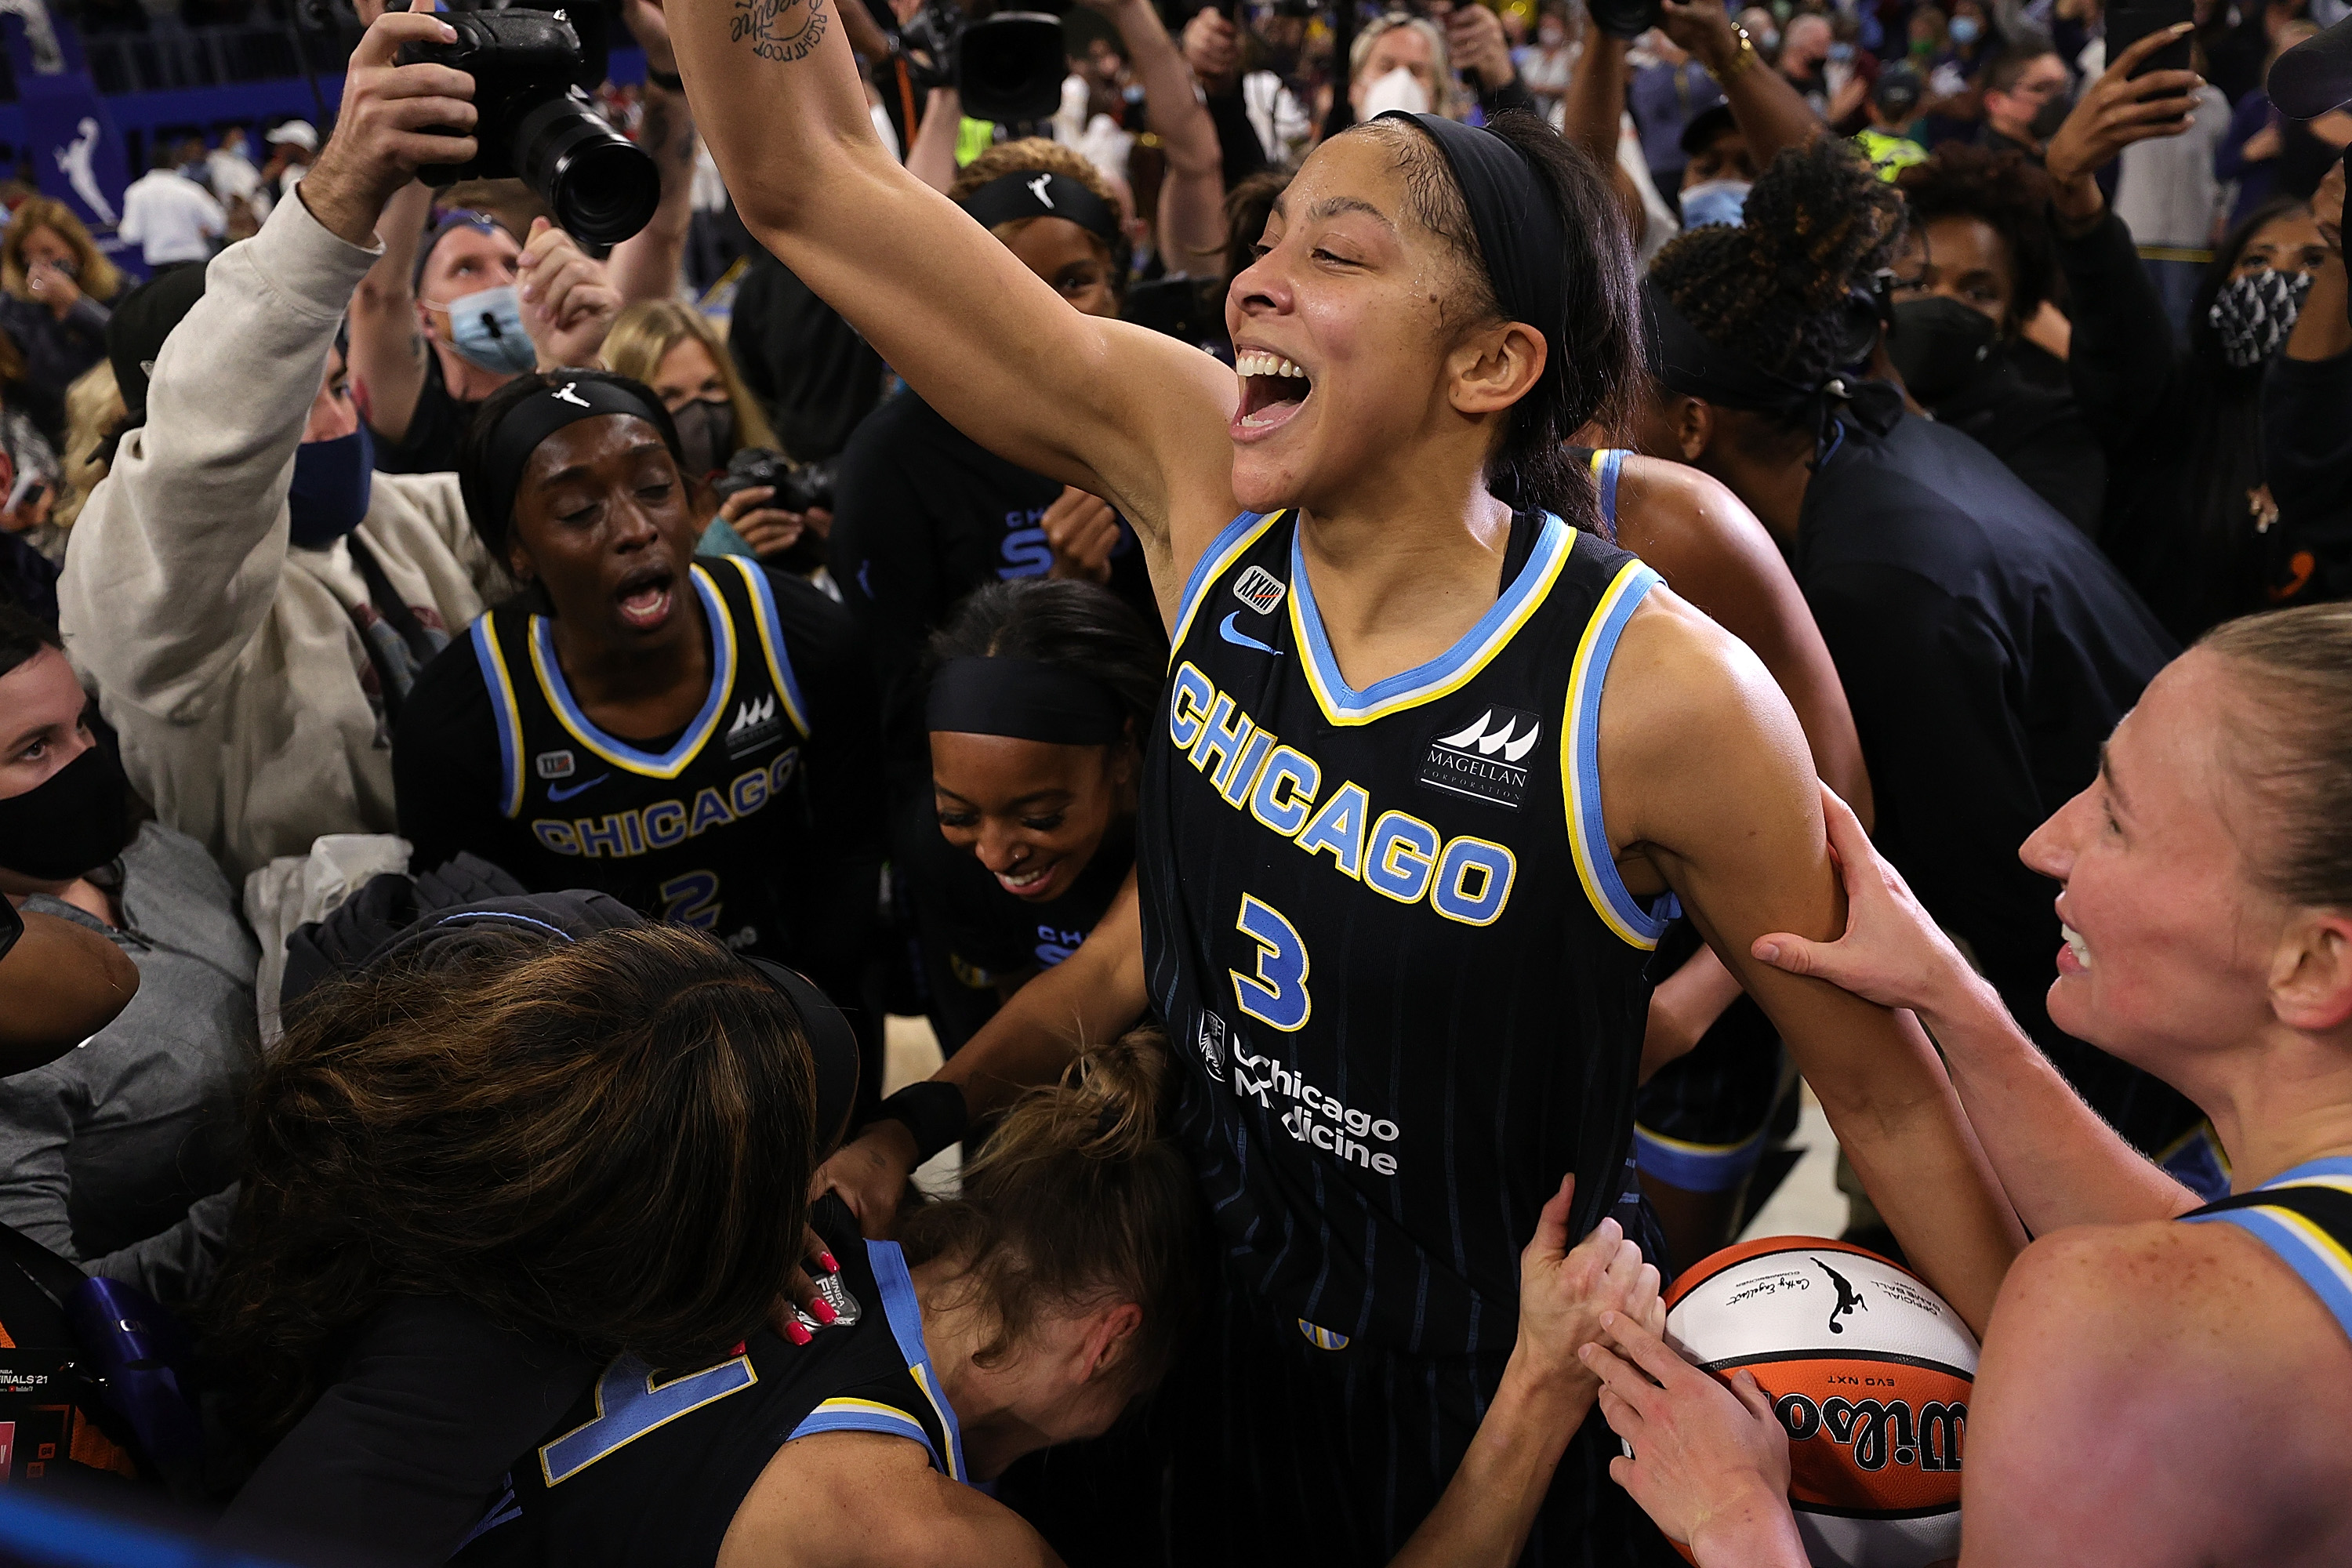 Atlanta Dream to play two preseason games ahead of 2021 WNBA